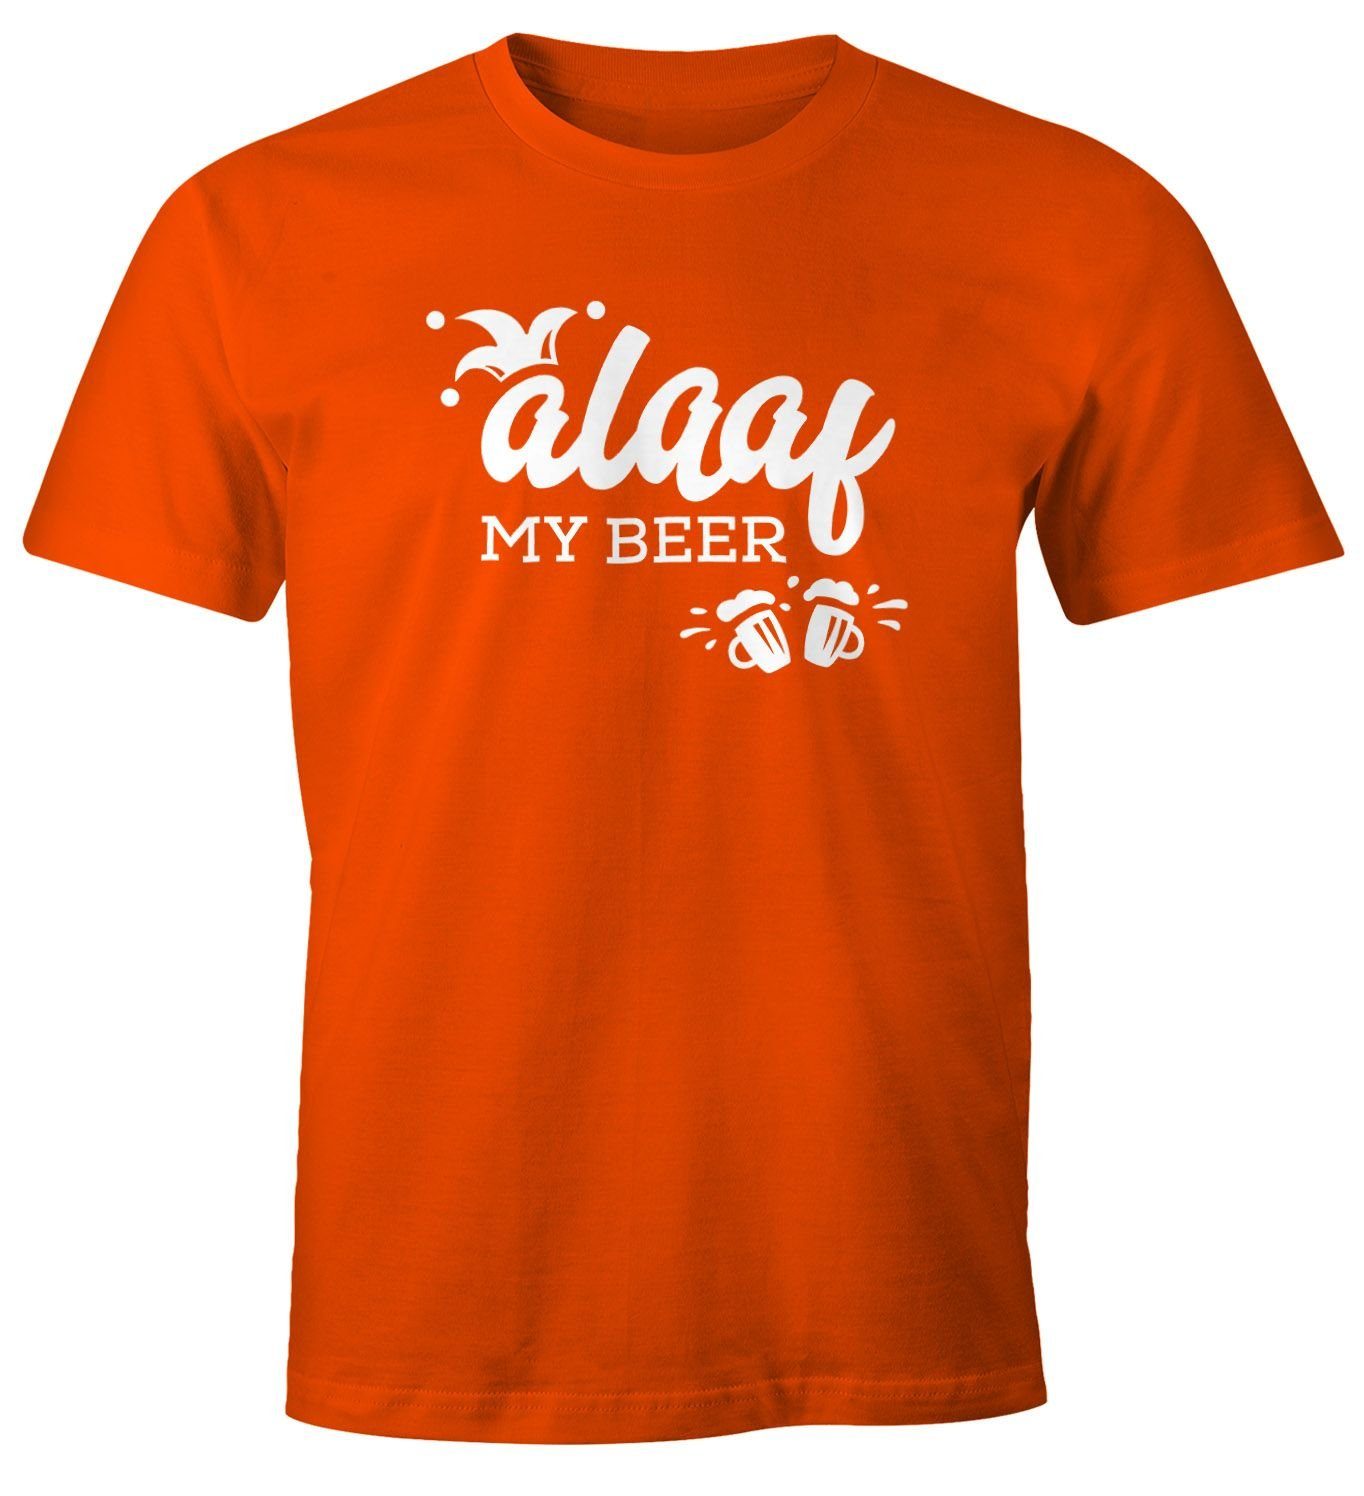 Verkleidung Moonworks® orange T-Shirt Fun-Shirt My beer Print Alaaf Herren Karneval mit MoonWorks Fastnacht Wortspiel Print-Shirt Kostüm Faschings-Shirt Fasching lustig